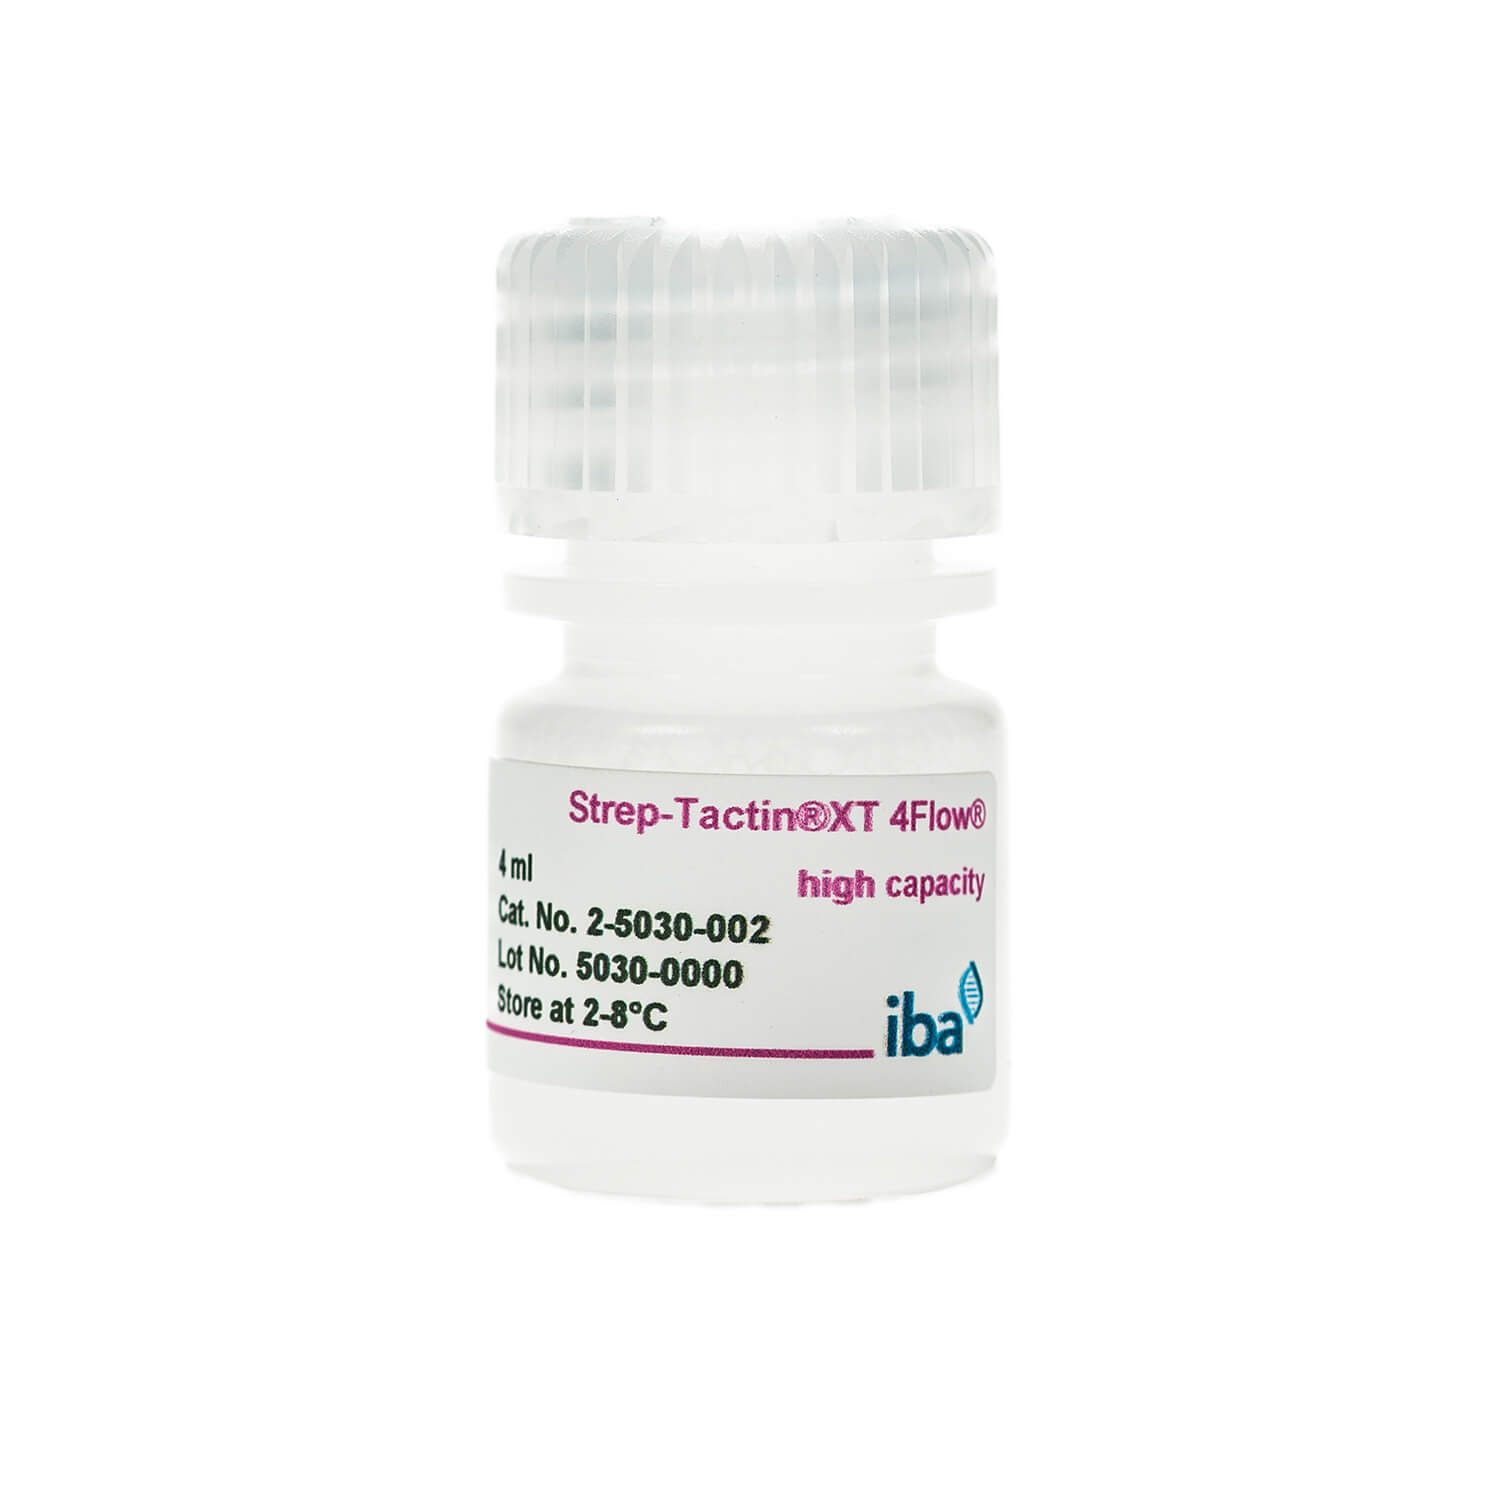 Strep-Tactin®XT 4Flow® high capacity resin